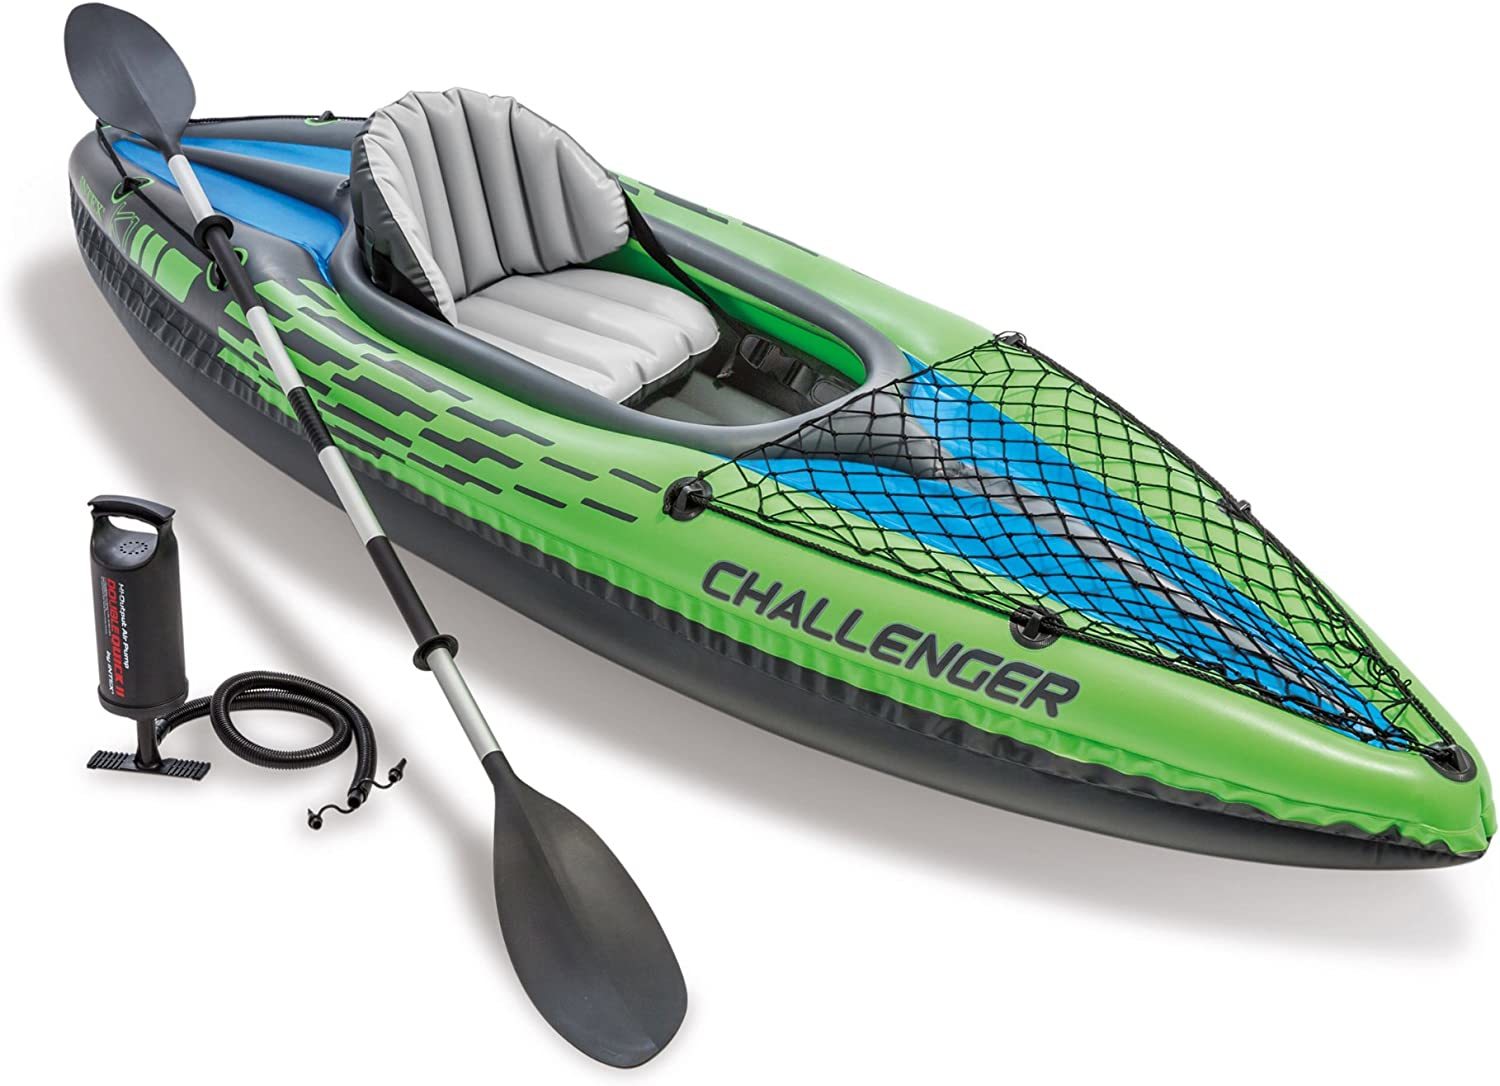 Intex Challenger Kayak, Inflatable Kayak Set With Aluminum Oars And High, Pump - $120.99